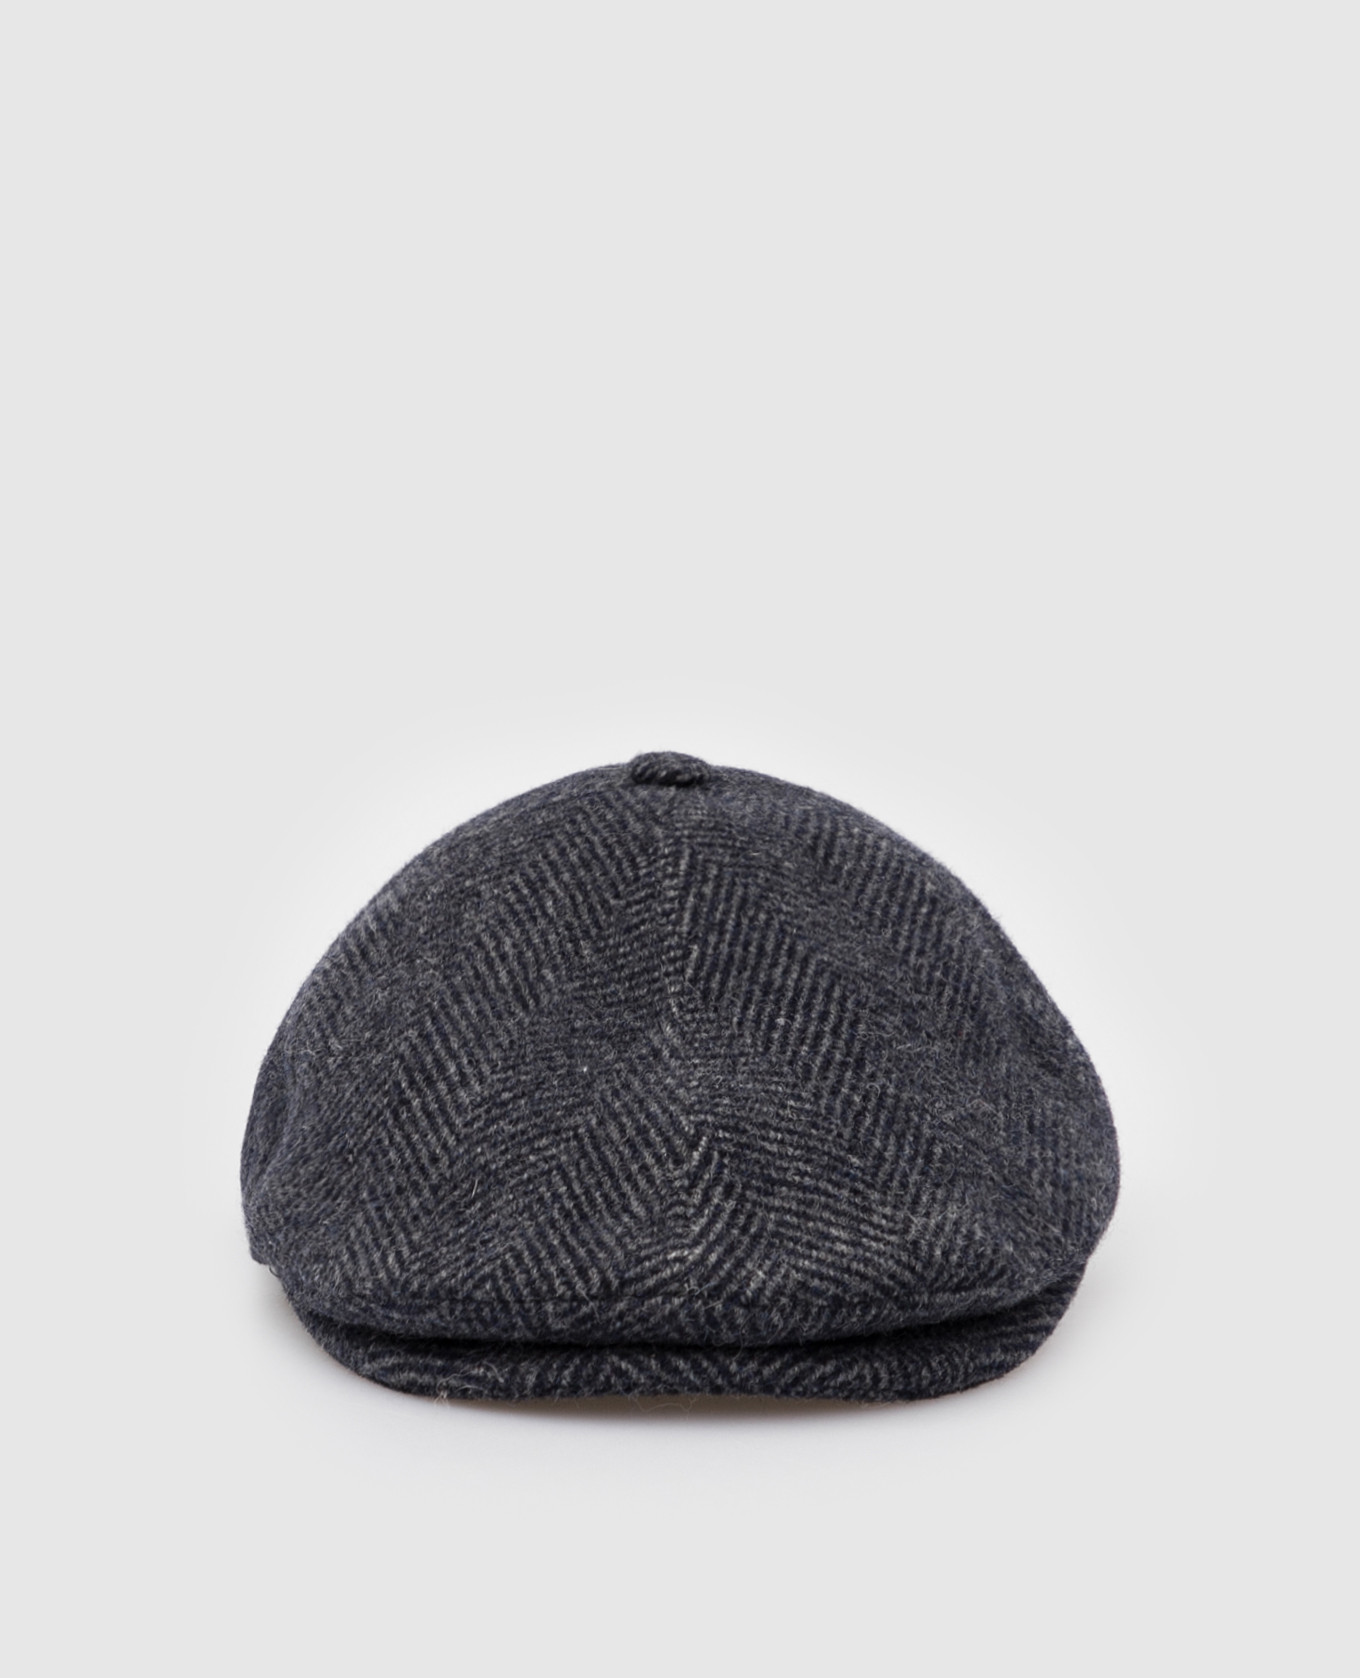 Children's navy wool and cashmere cap